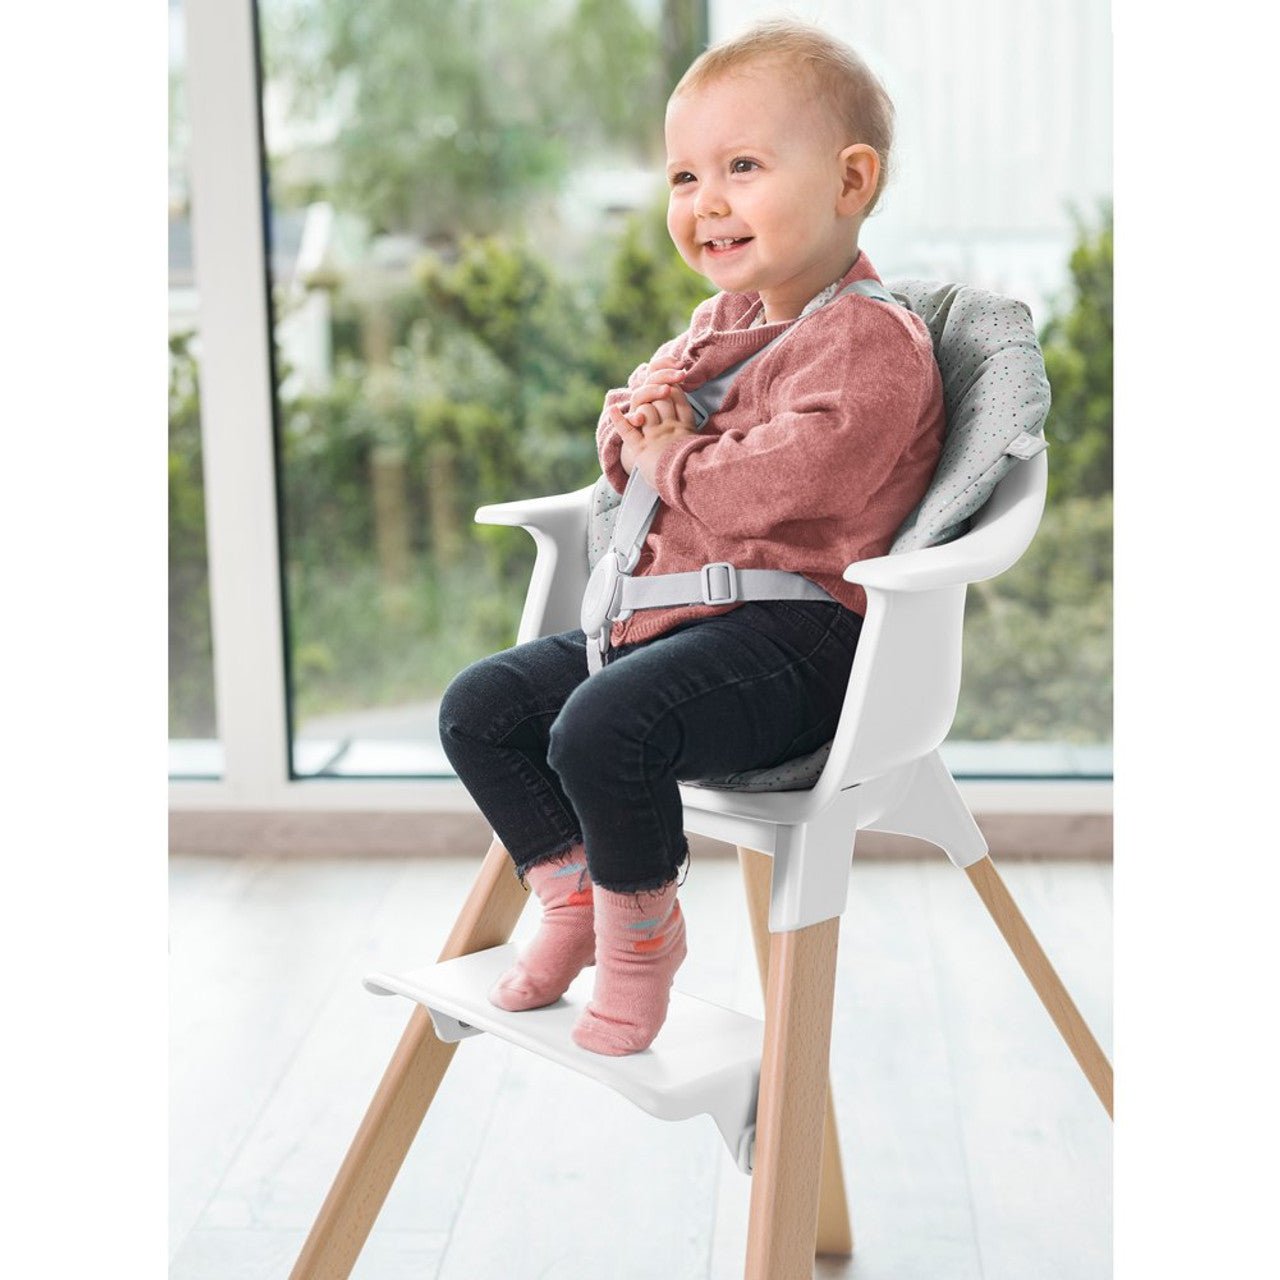 Stokke Clikk High Chair with Travel Bag, White - ANB Baby -816559153230$100 - $300